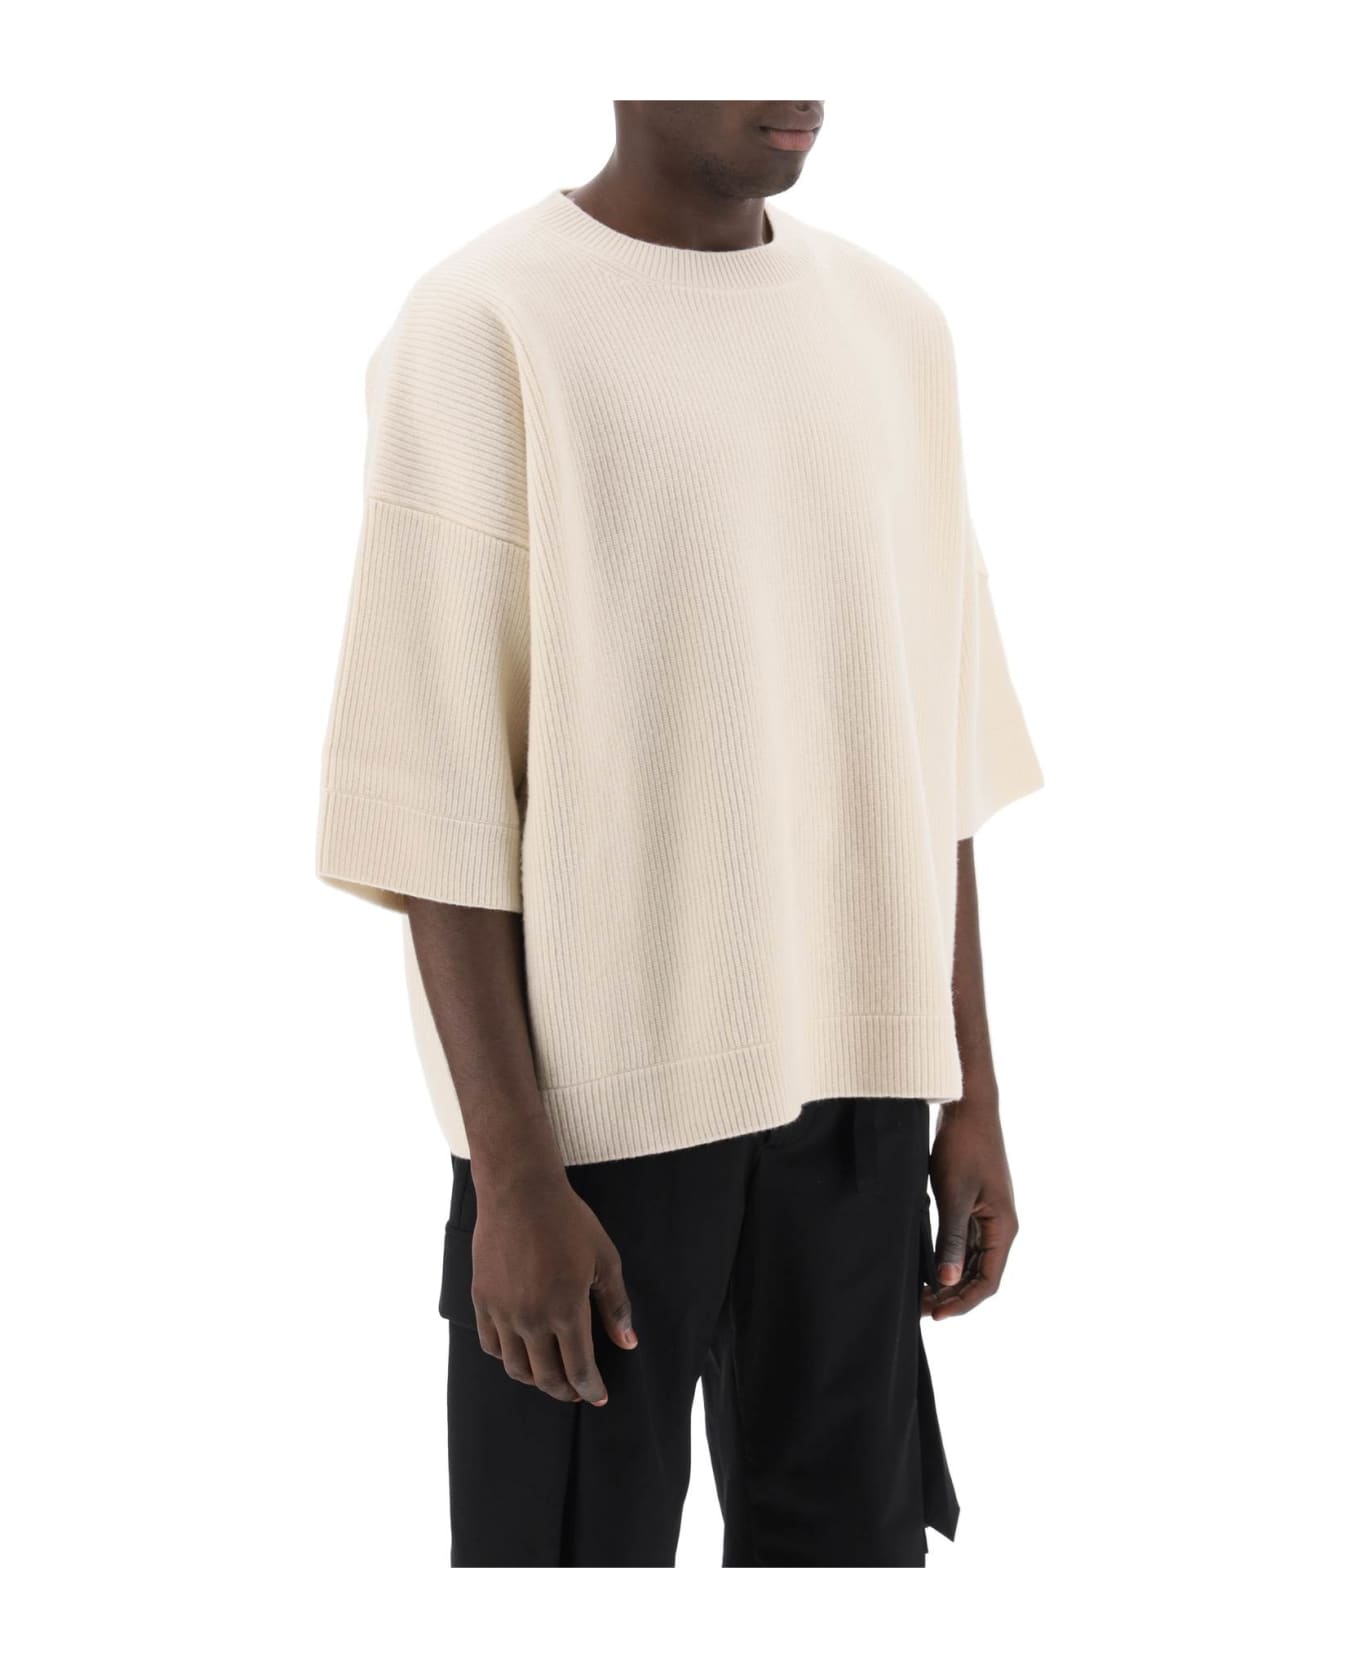 Moncler Genius Moncler X Roc Nation Designed By Jay-z - Virgin Wool Crew-neck Sweater - White ニットウェア